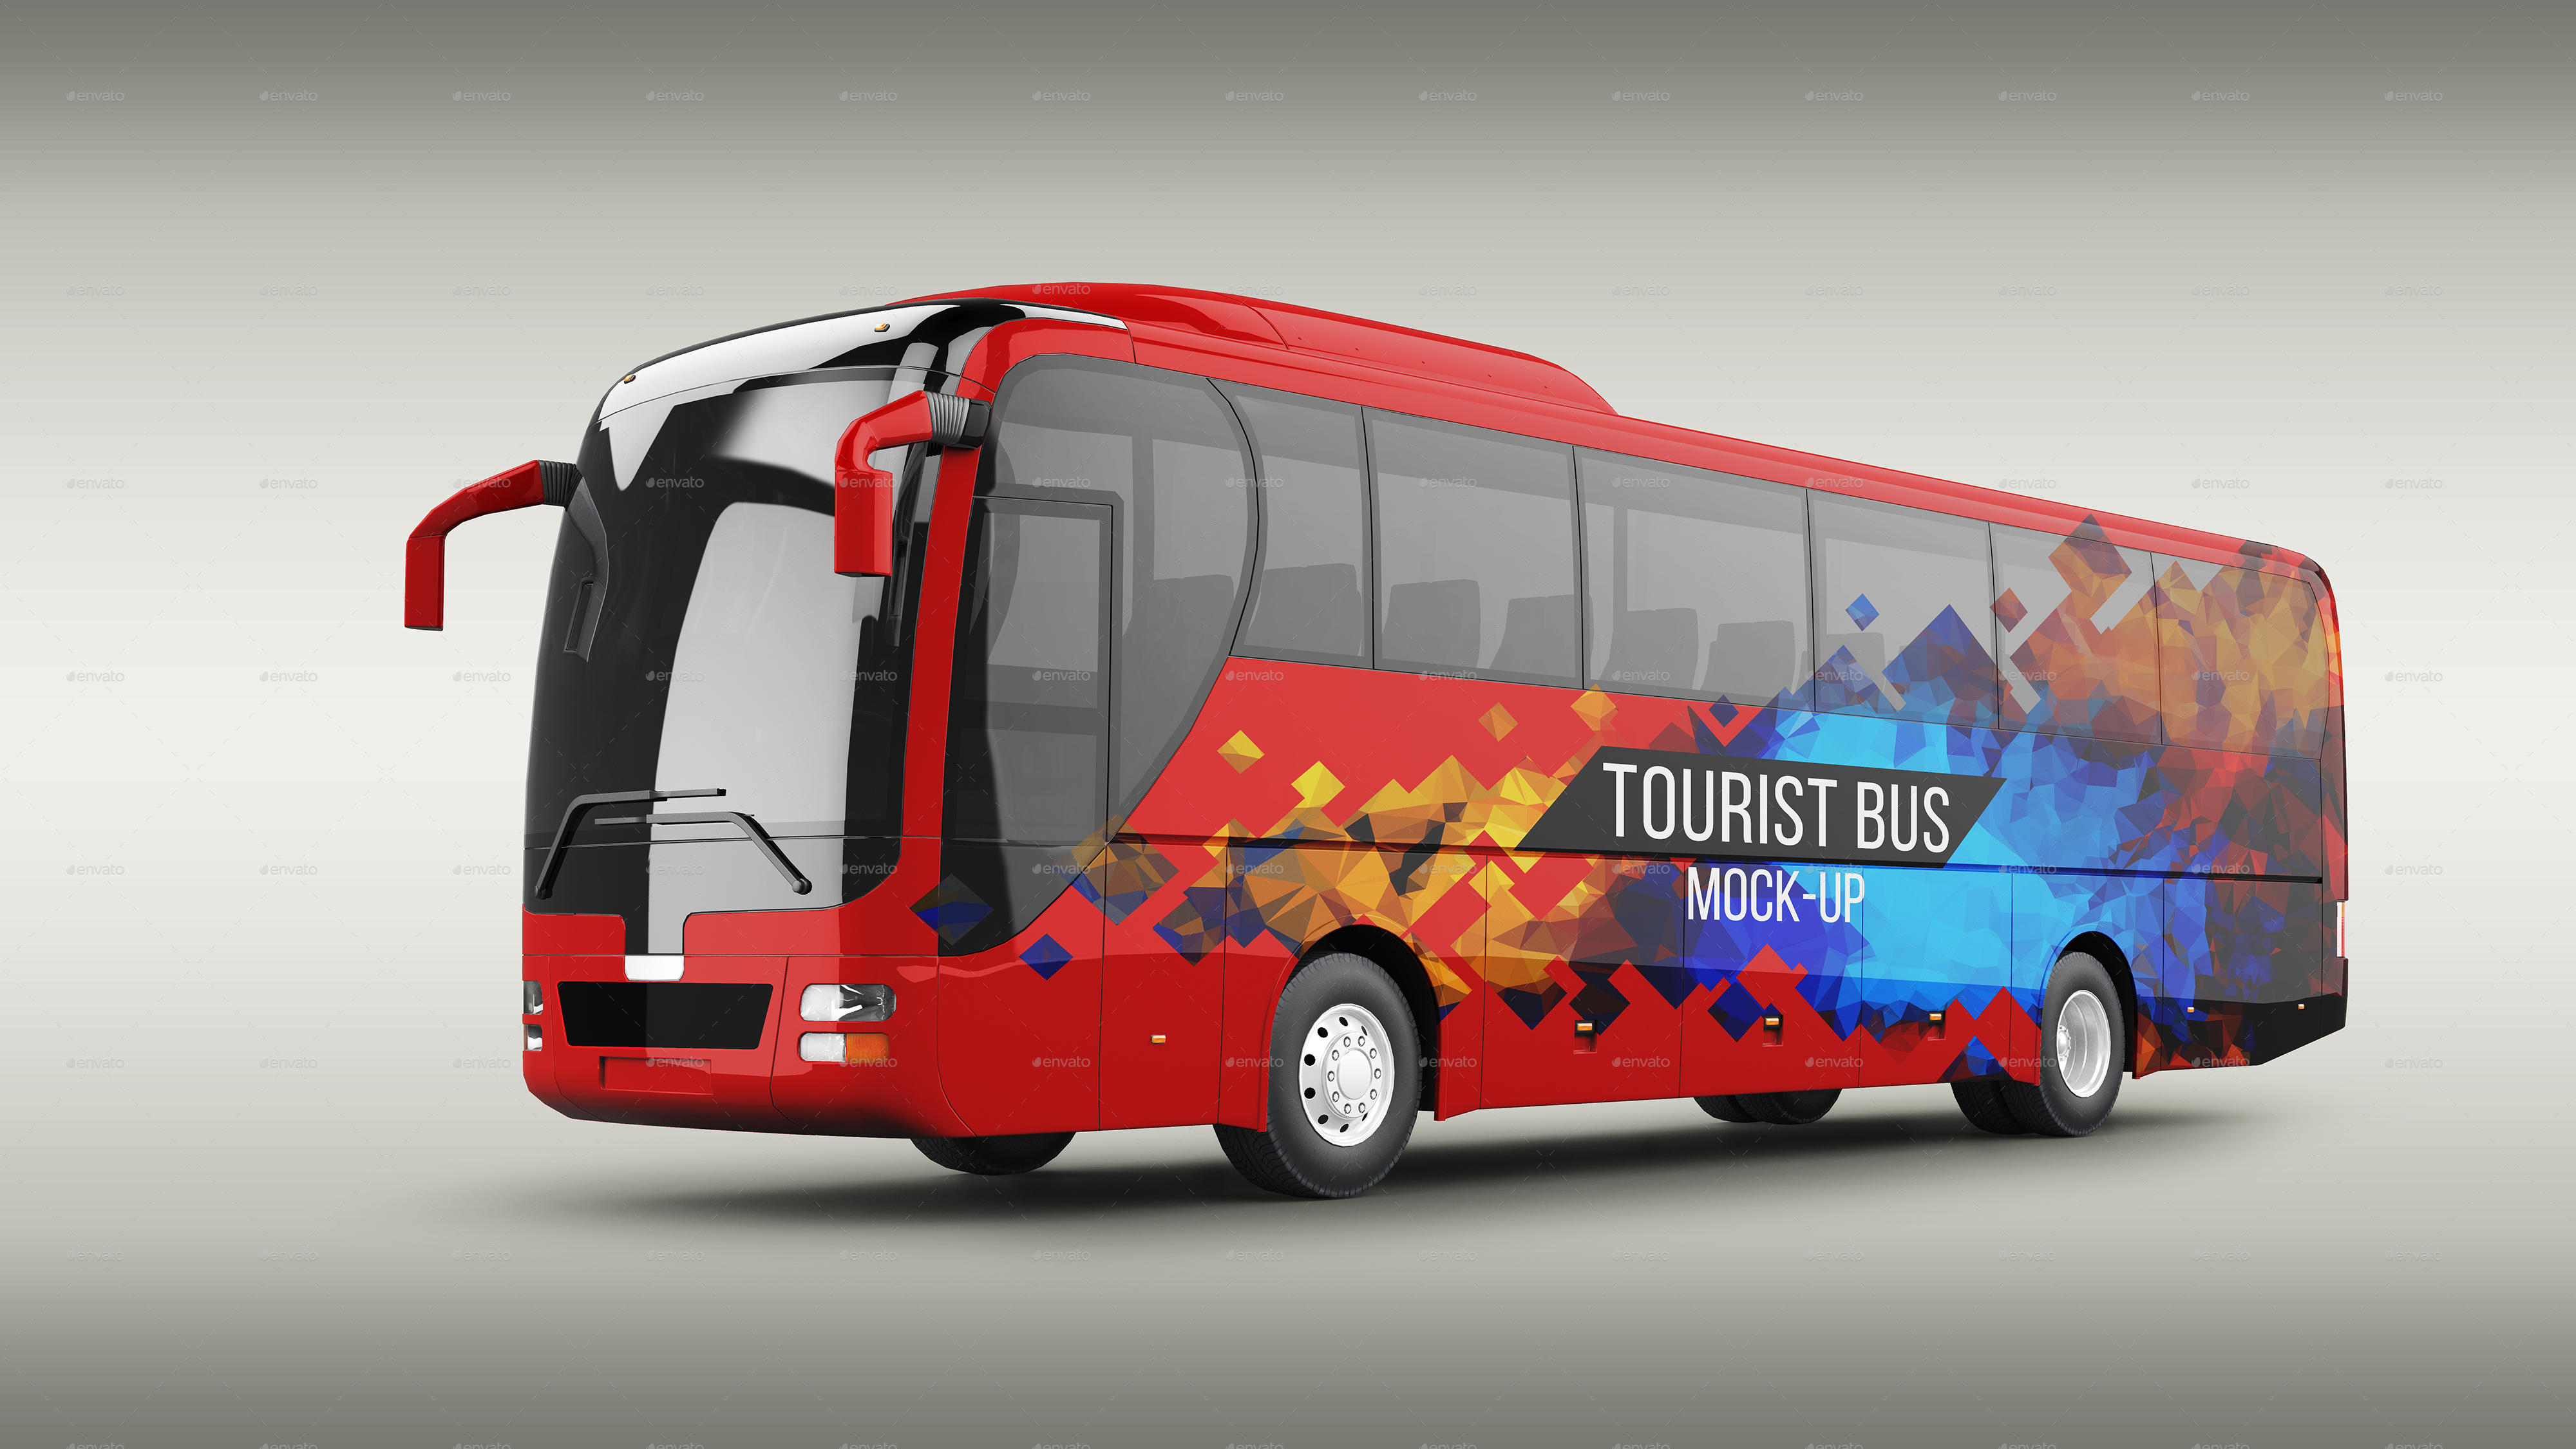 Download Tourist Bus Mock-Up by AlexKond | GraphicRiver